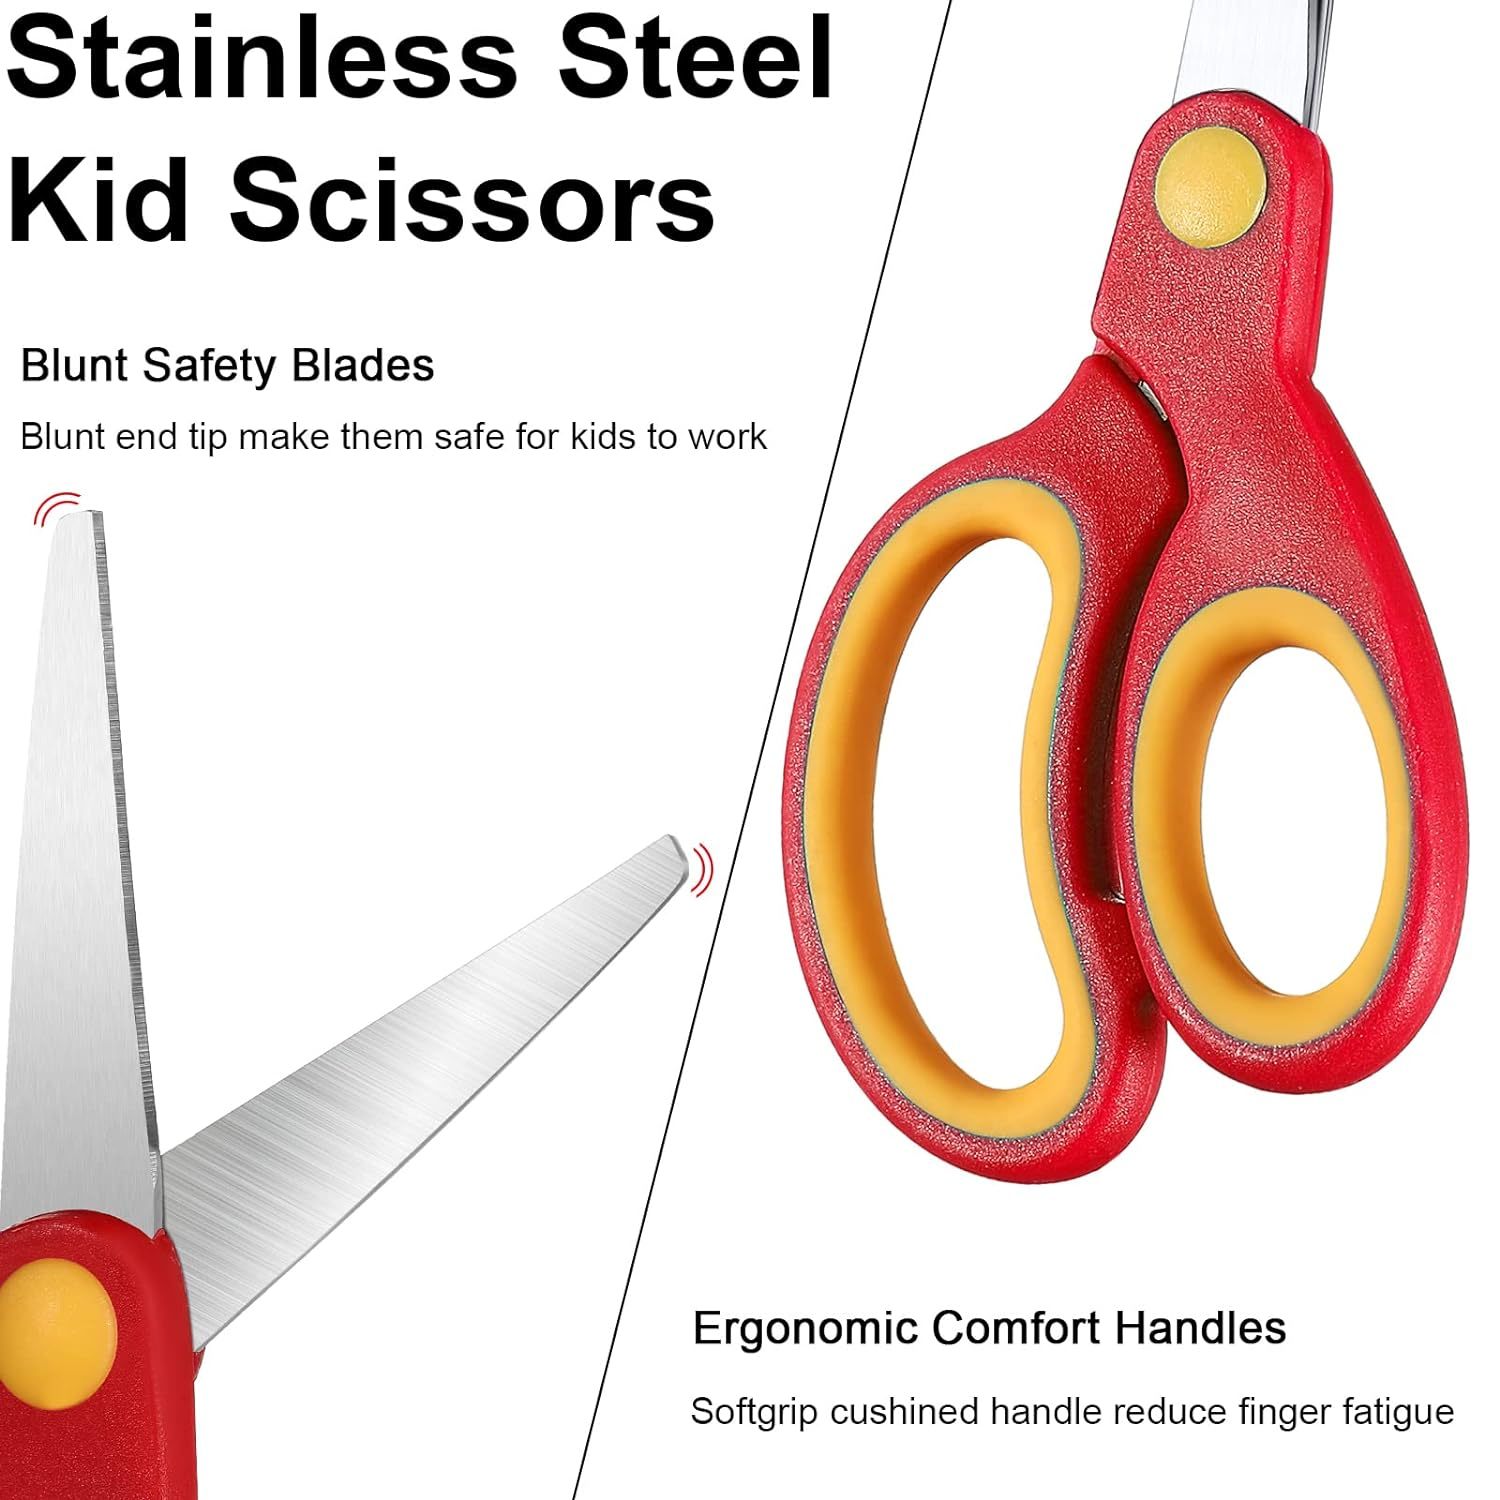 Fiskars Everyday Titanium Adult Scissors 2 Pack, 8 Inch, Gray